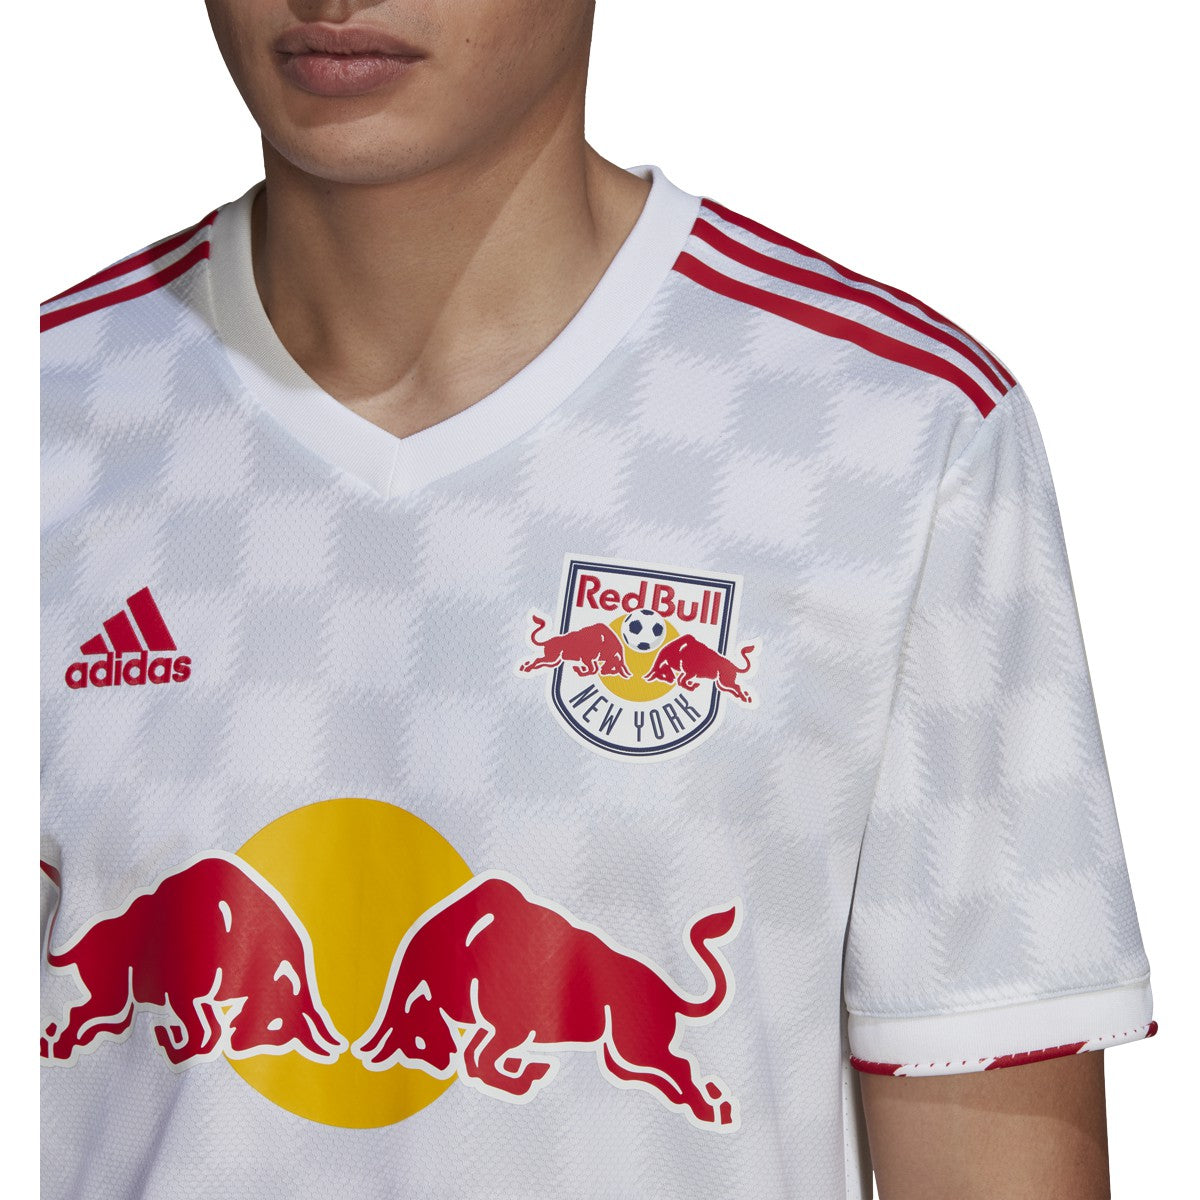 adidas, Shirts, Adidas Mens New York Red Bulls Soccer Jersey Mls